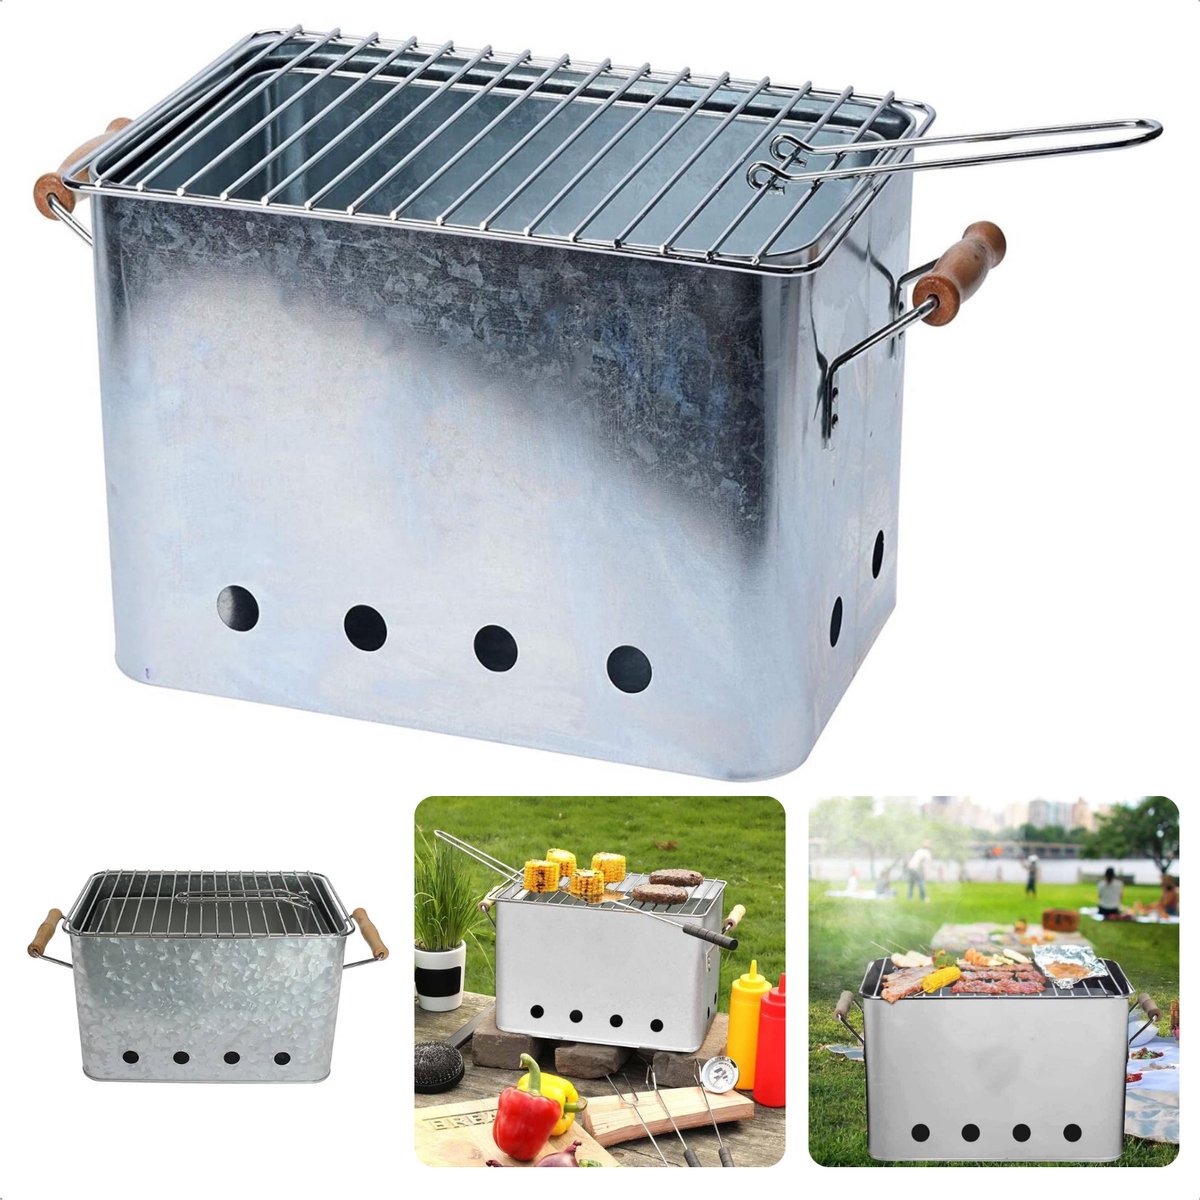 Cheqo® Draagbare BBQ - Kleine Barbecue voor Camping - Houtskoolbarbecue - Compact Ontwerp - 72x24cm - Zink